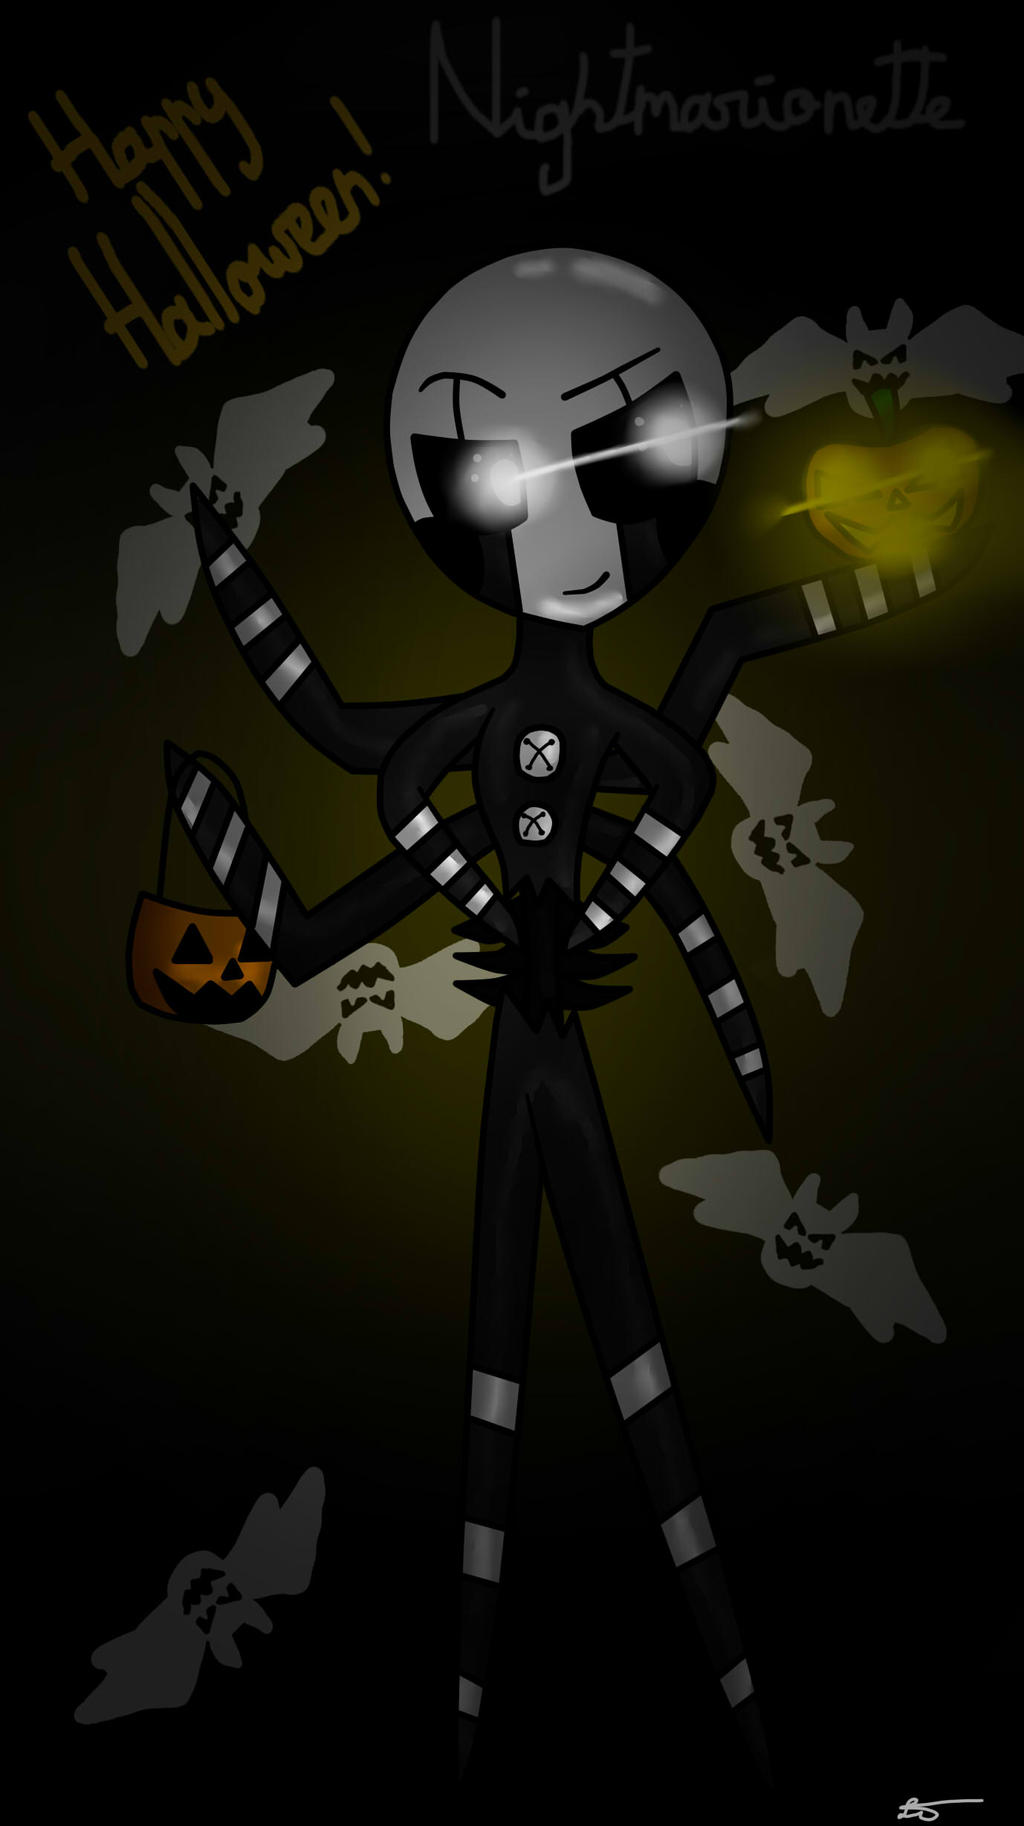 FNAF 4 Halloween Nightmares by FOXYANDMANGLE on DeviantArt